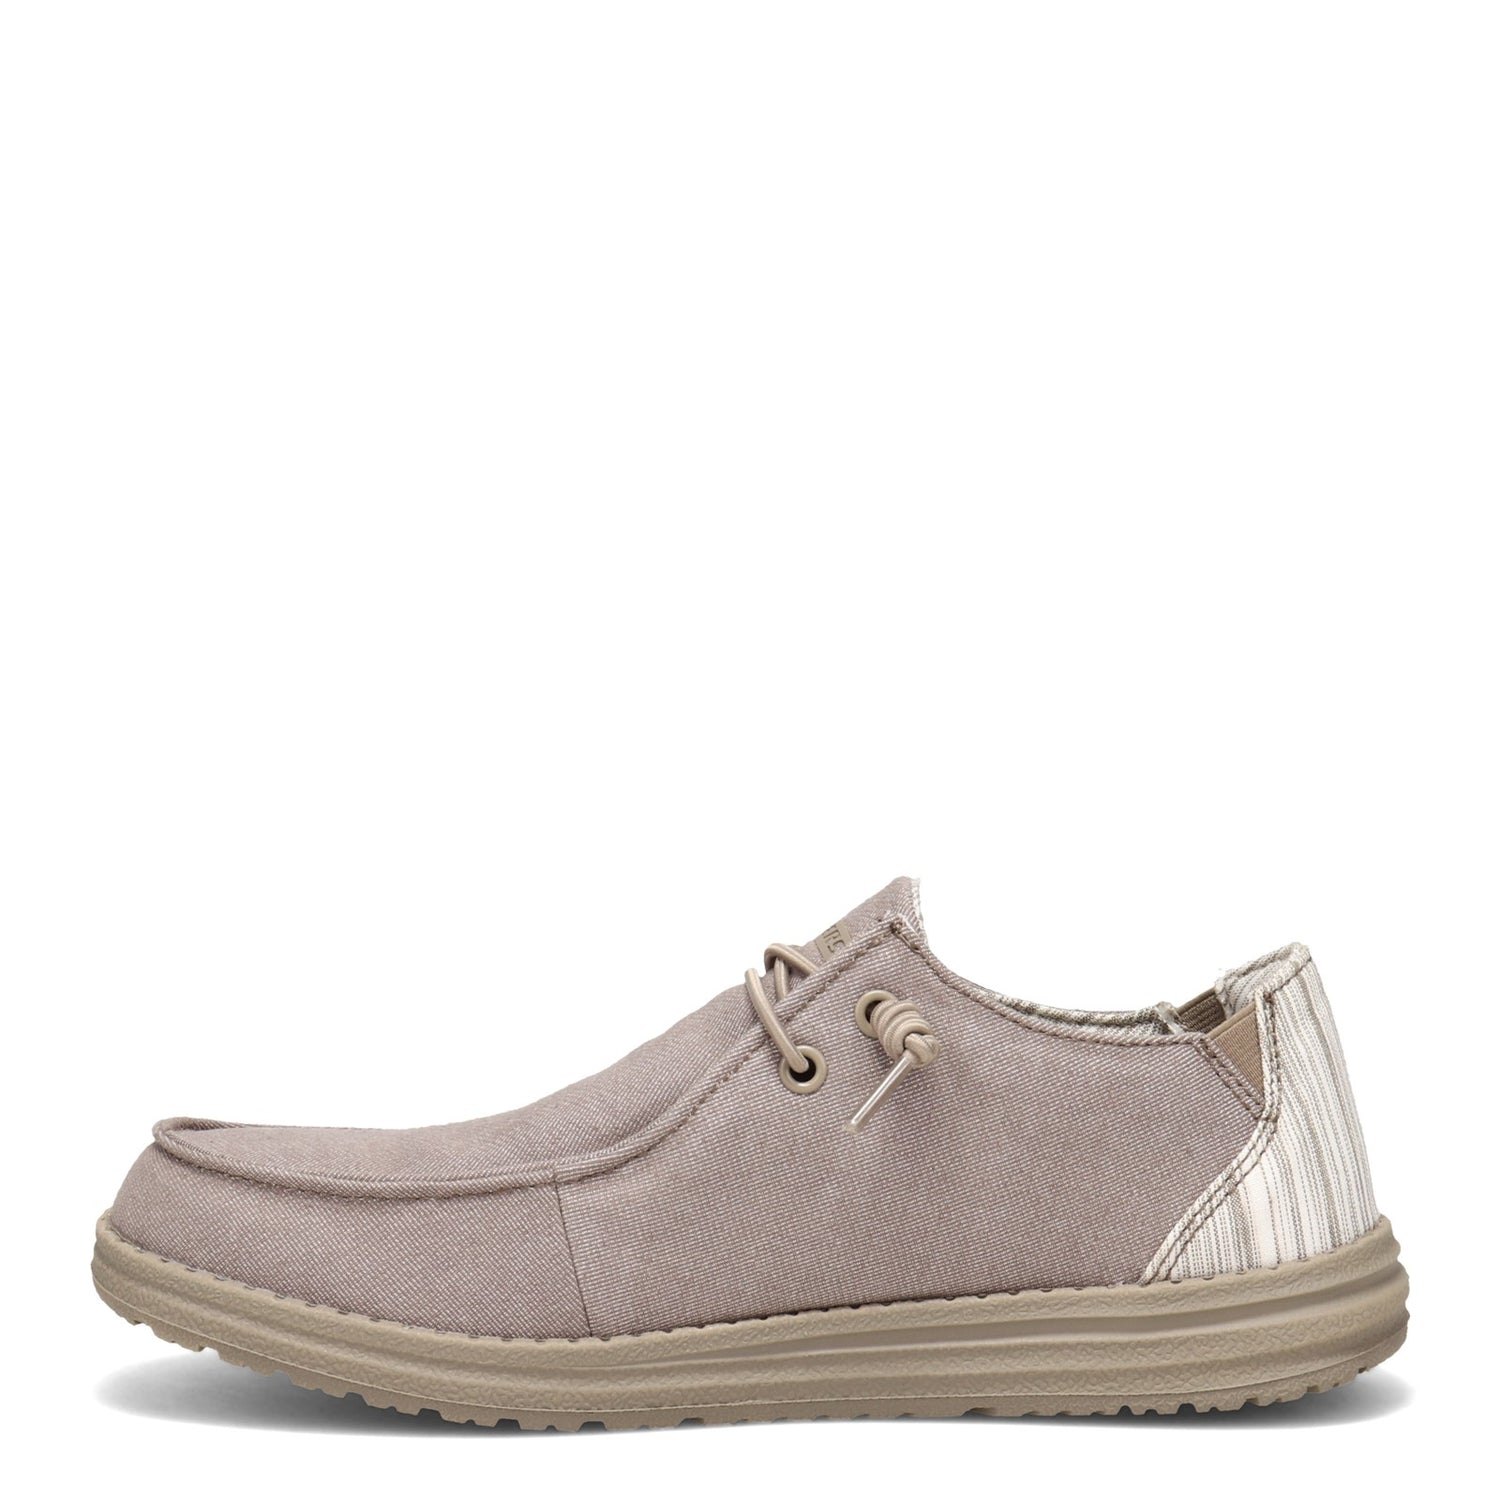 Peltz Shoes  Men's Skechers Relaxed Fit: Melson - Aveso Slip-On TAN 210114-TAN